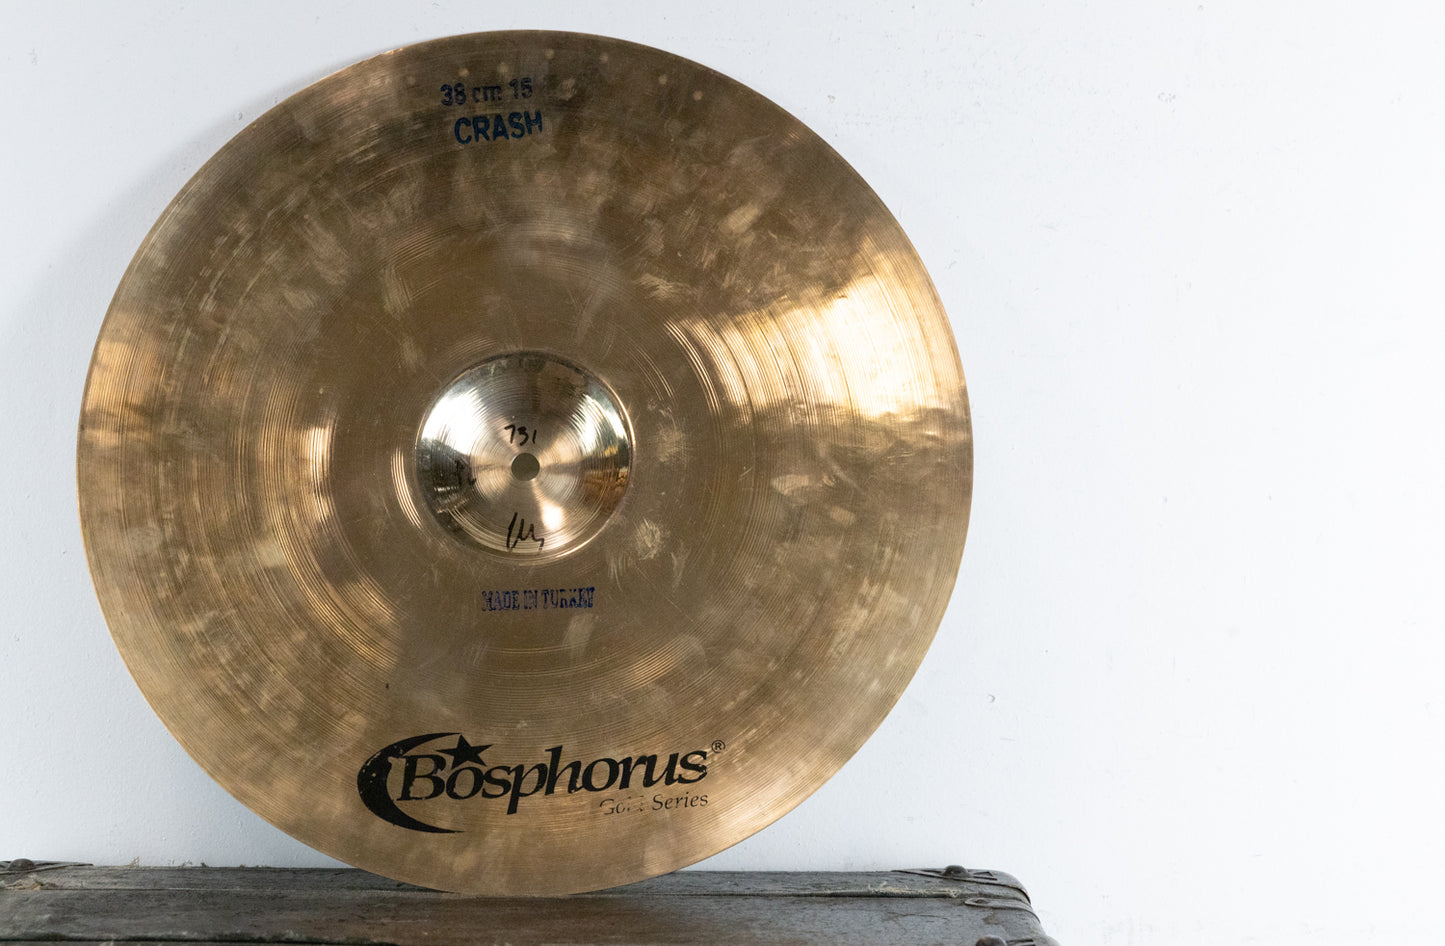 Bosphorus 15" Gold Series Crash Cymbal 731g